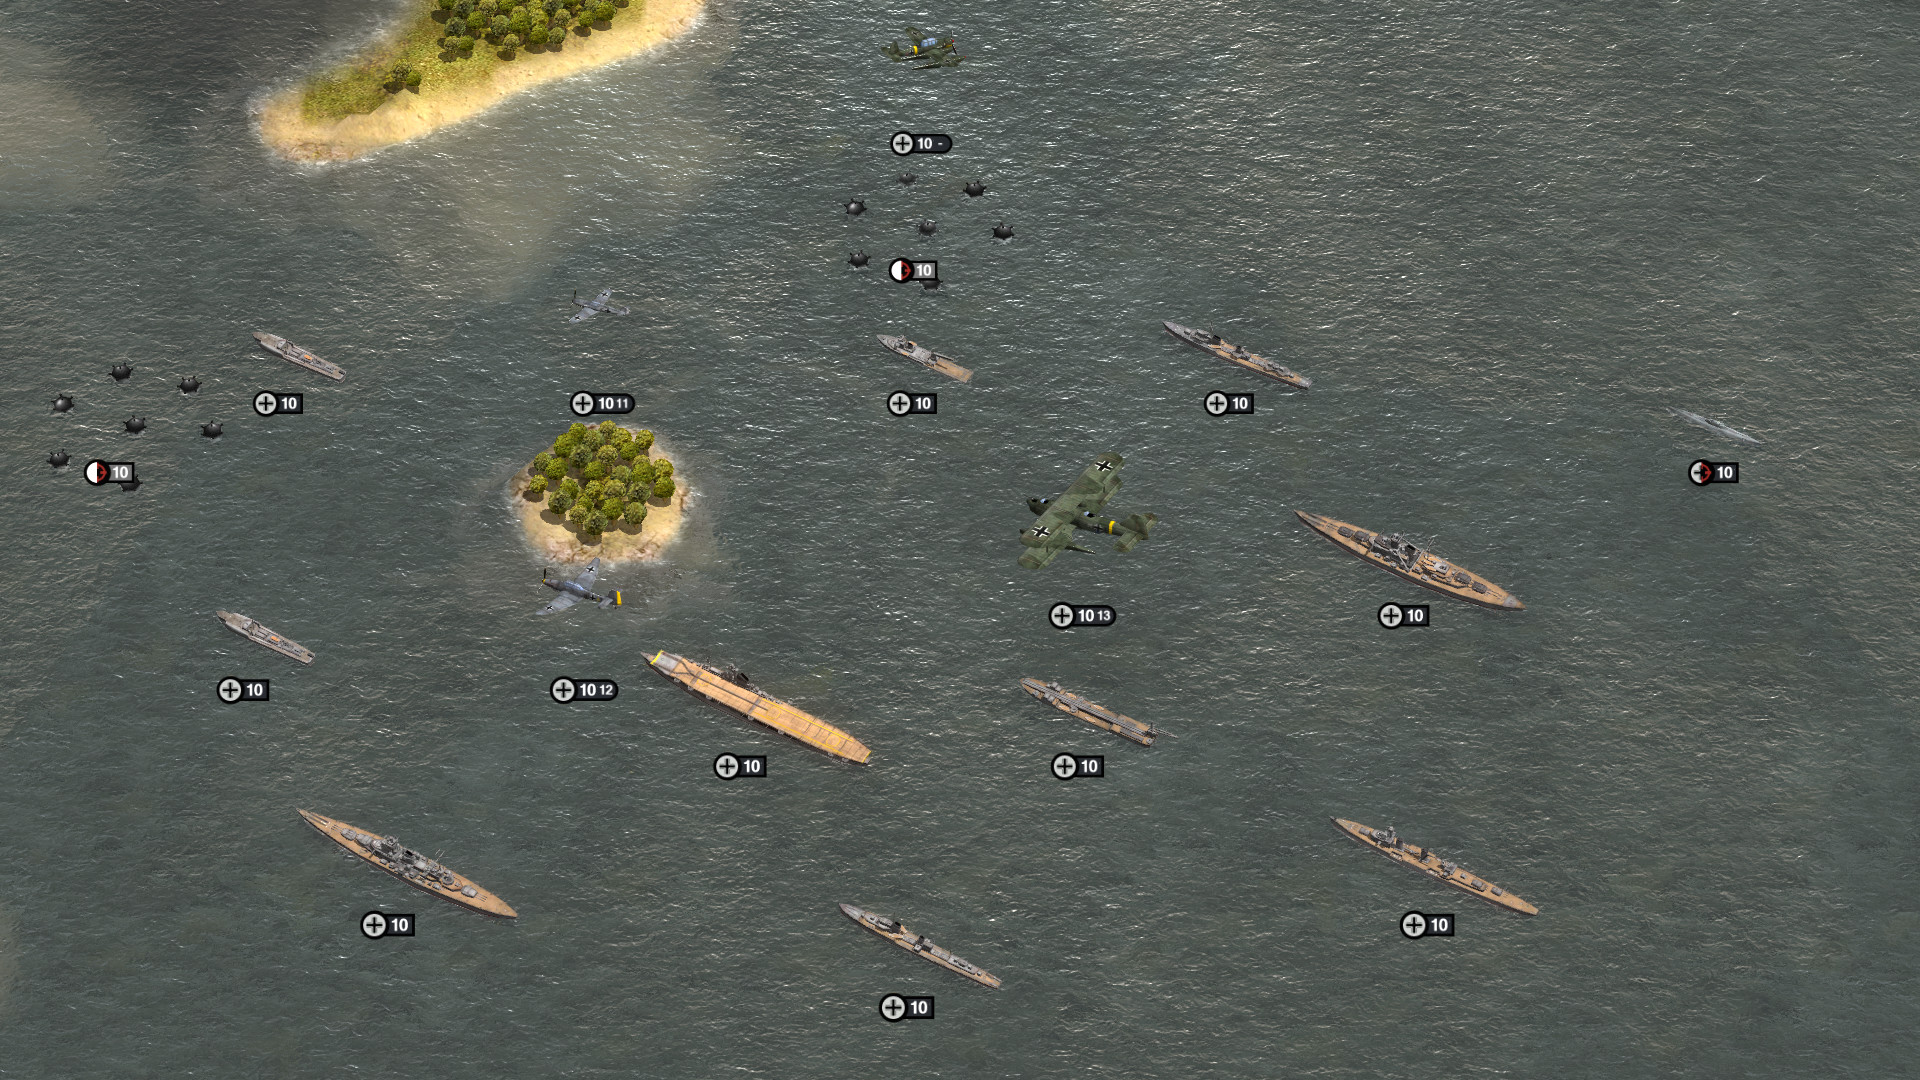 Order of Battle: Kriegsmarine screenshot